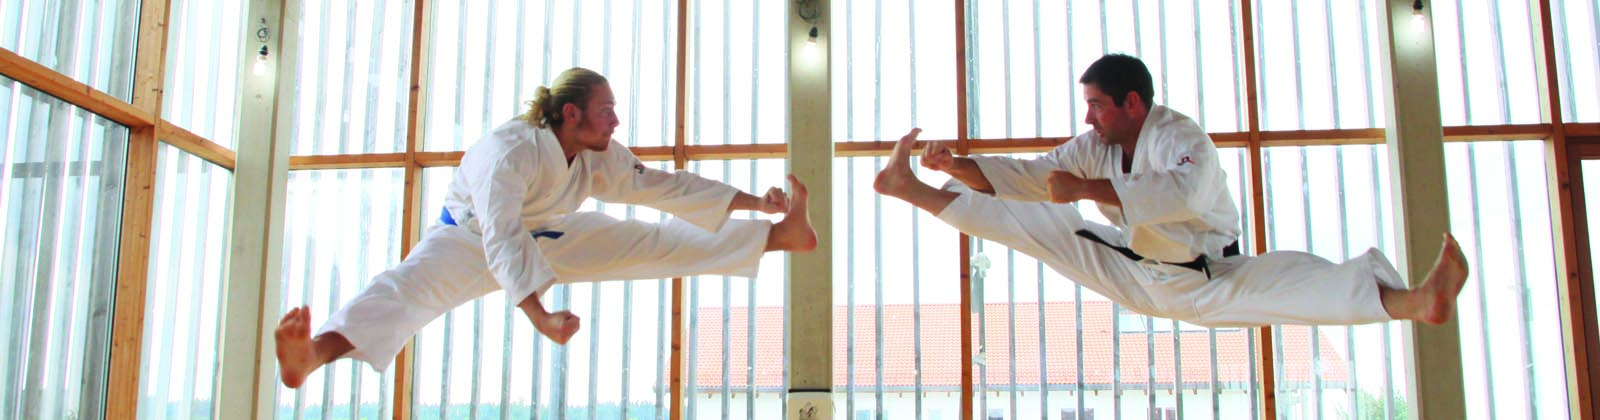 Taekwondo Eichenau